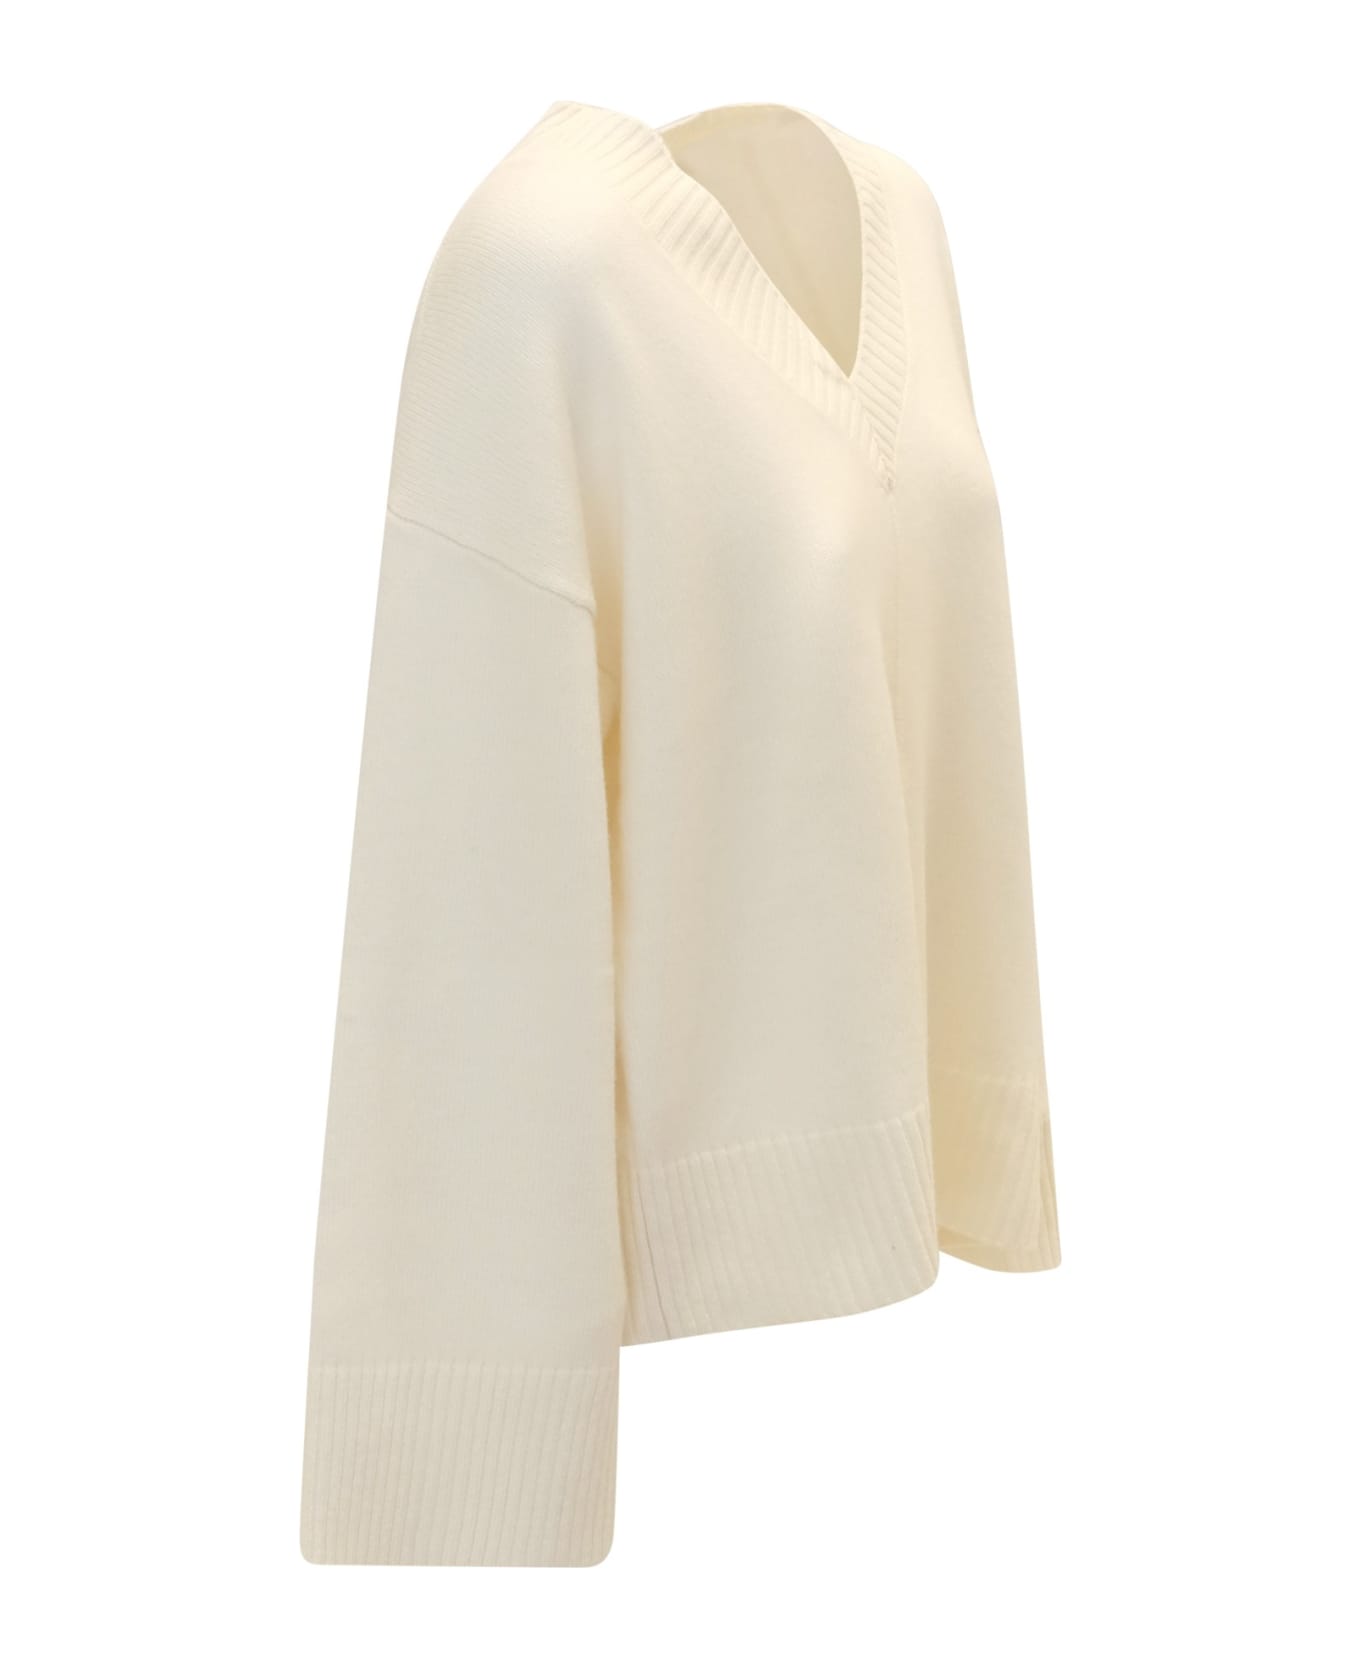 Parosh 002 Led White Sweater